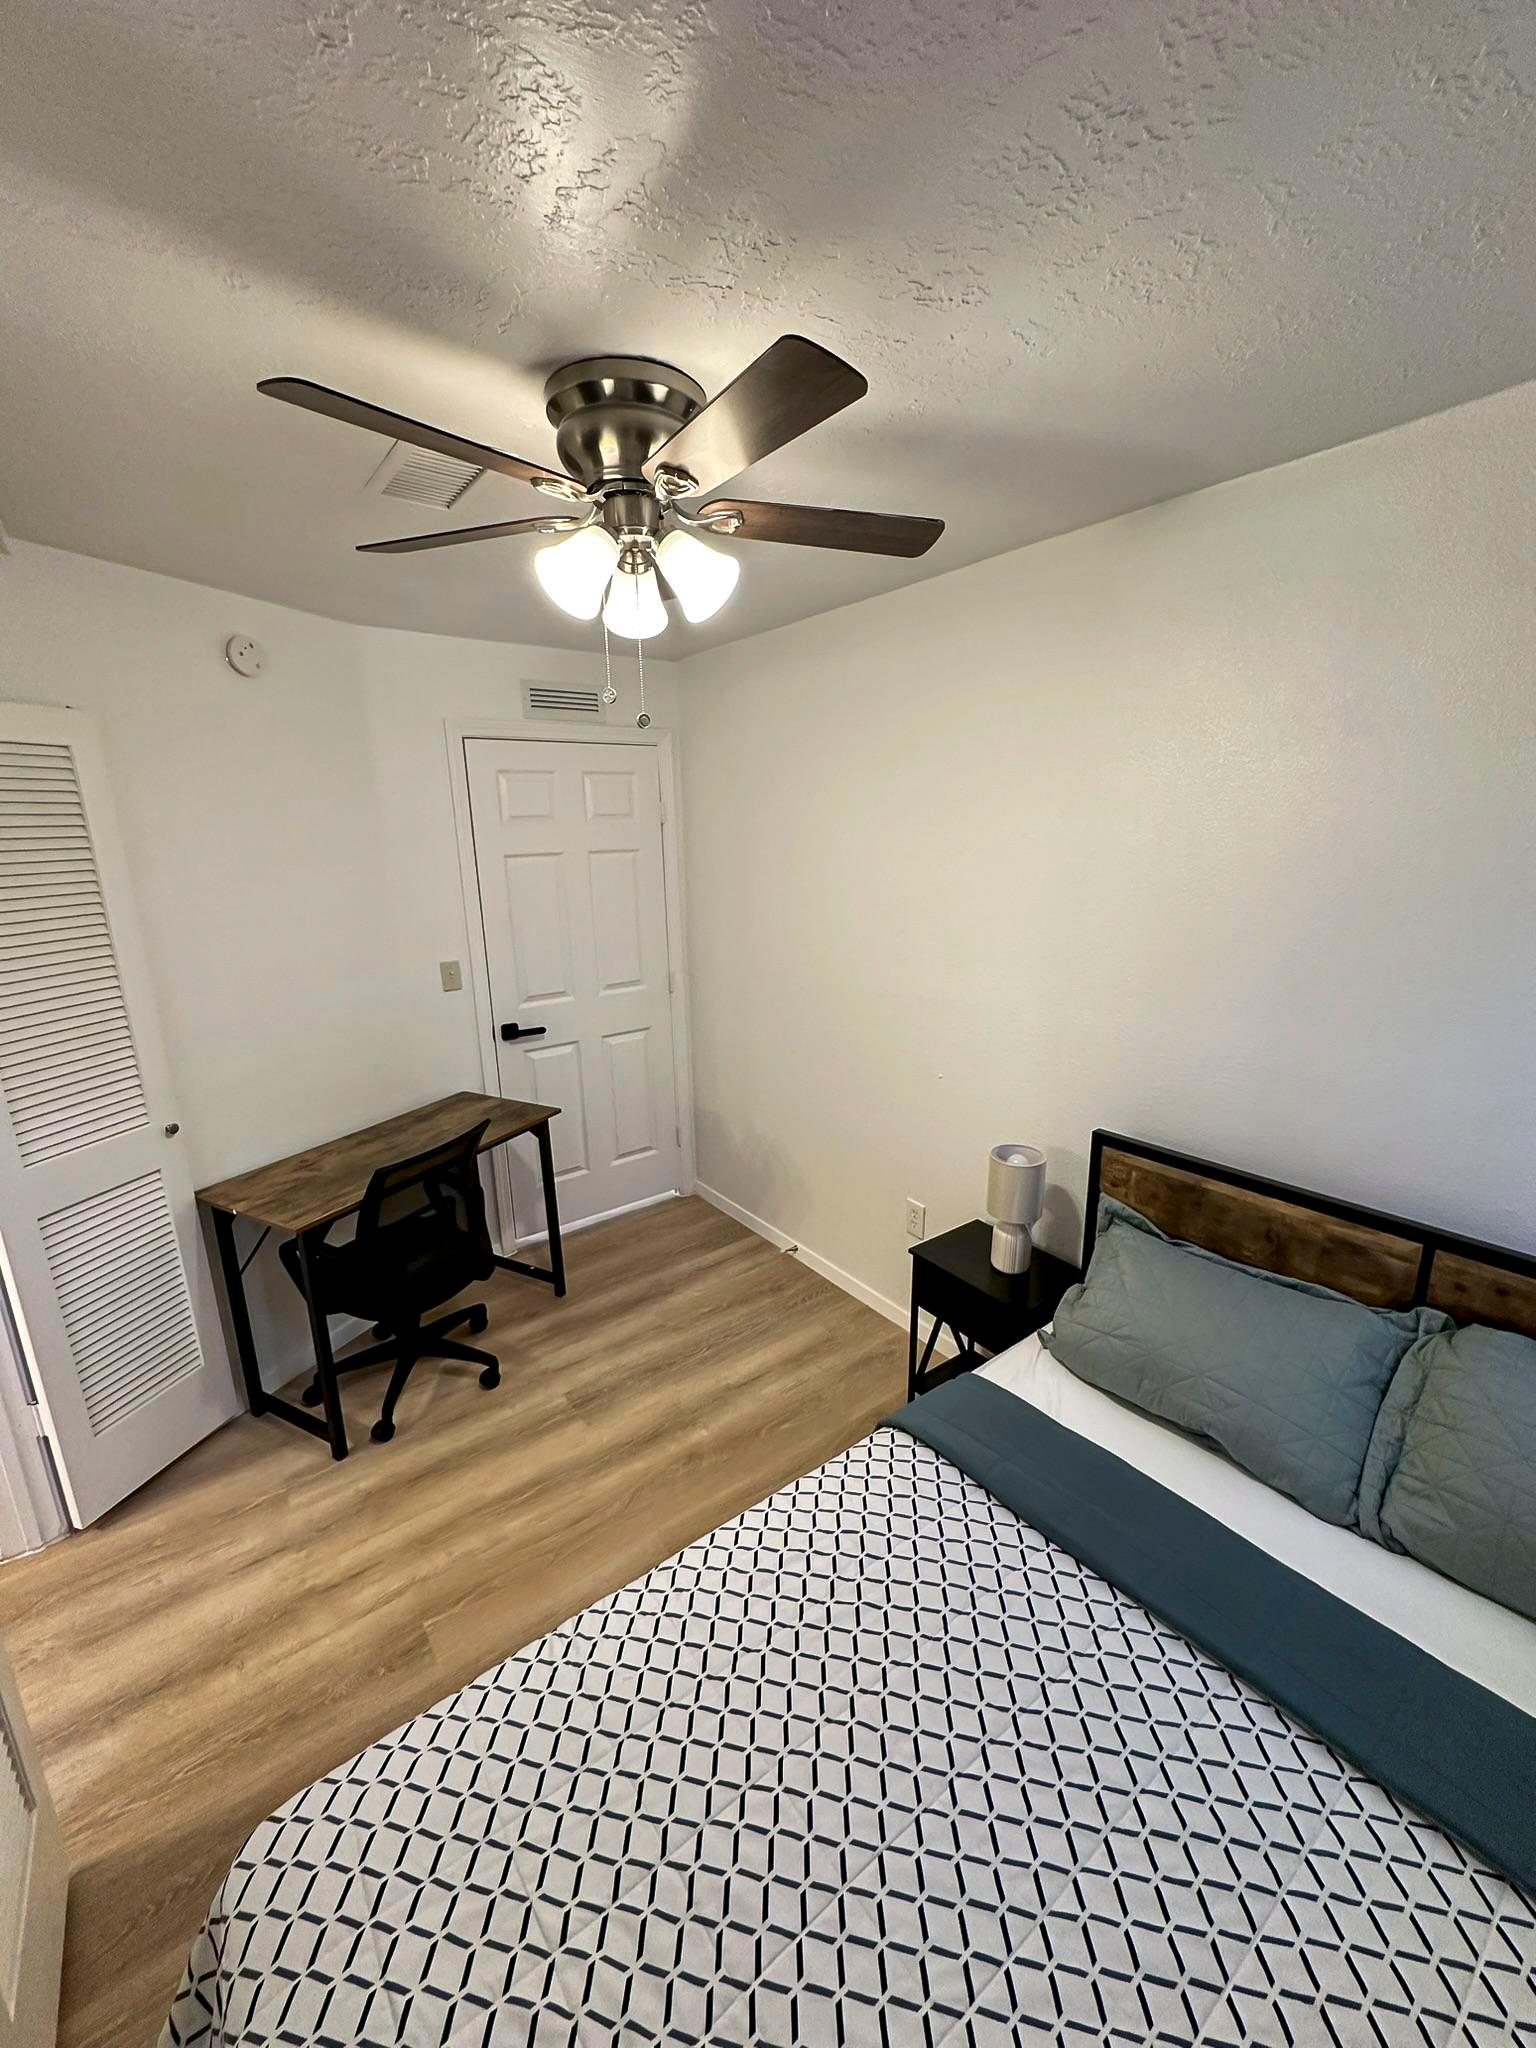 bedroom, detected:ceiling fan, window blind, bed, carpet